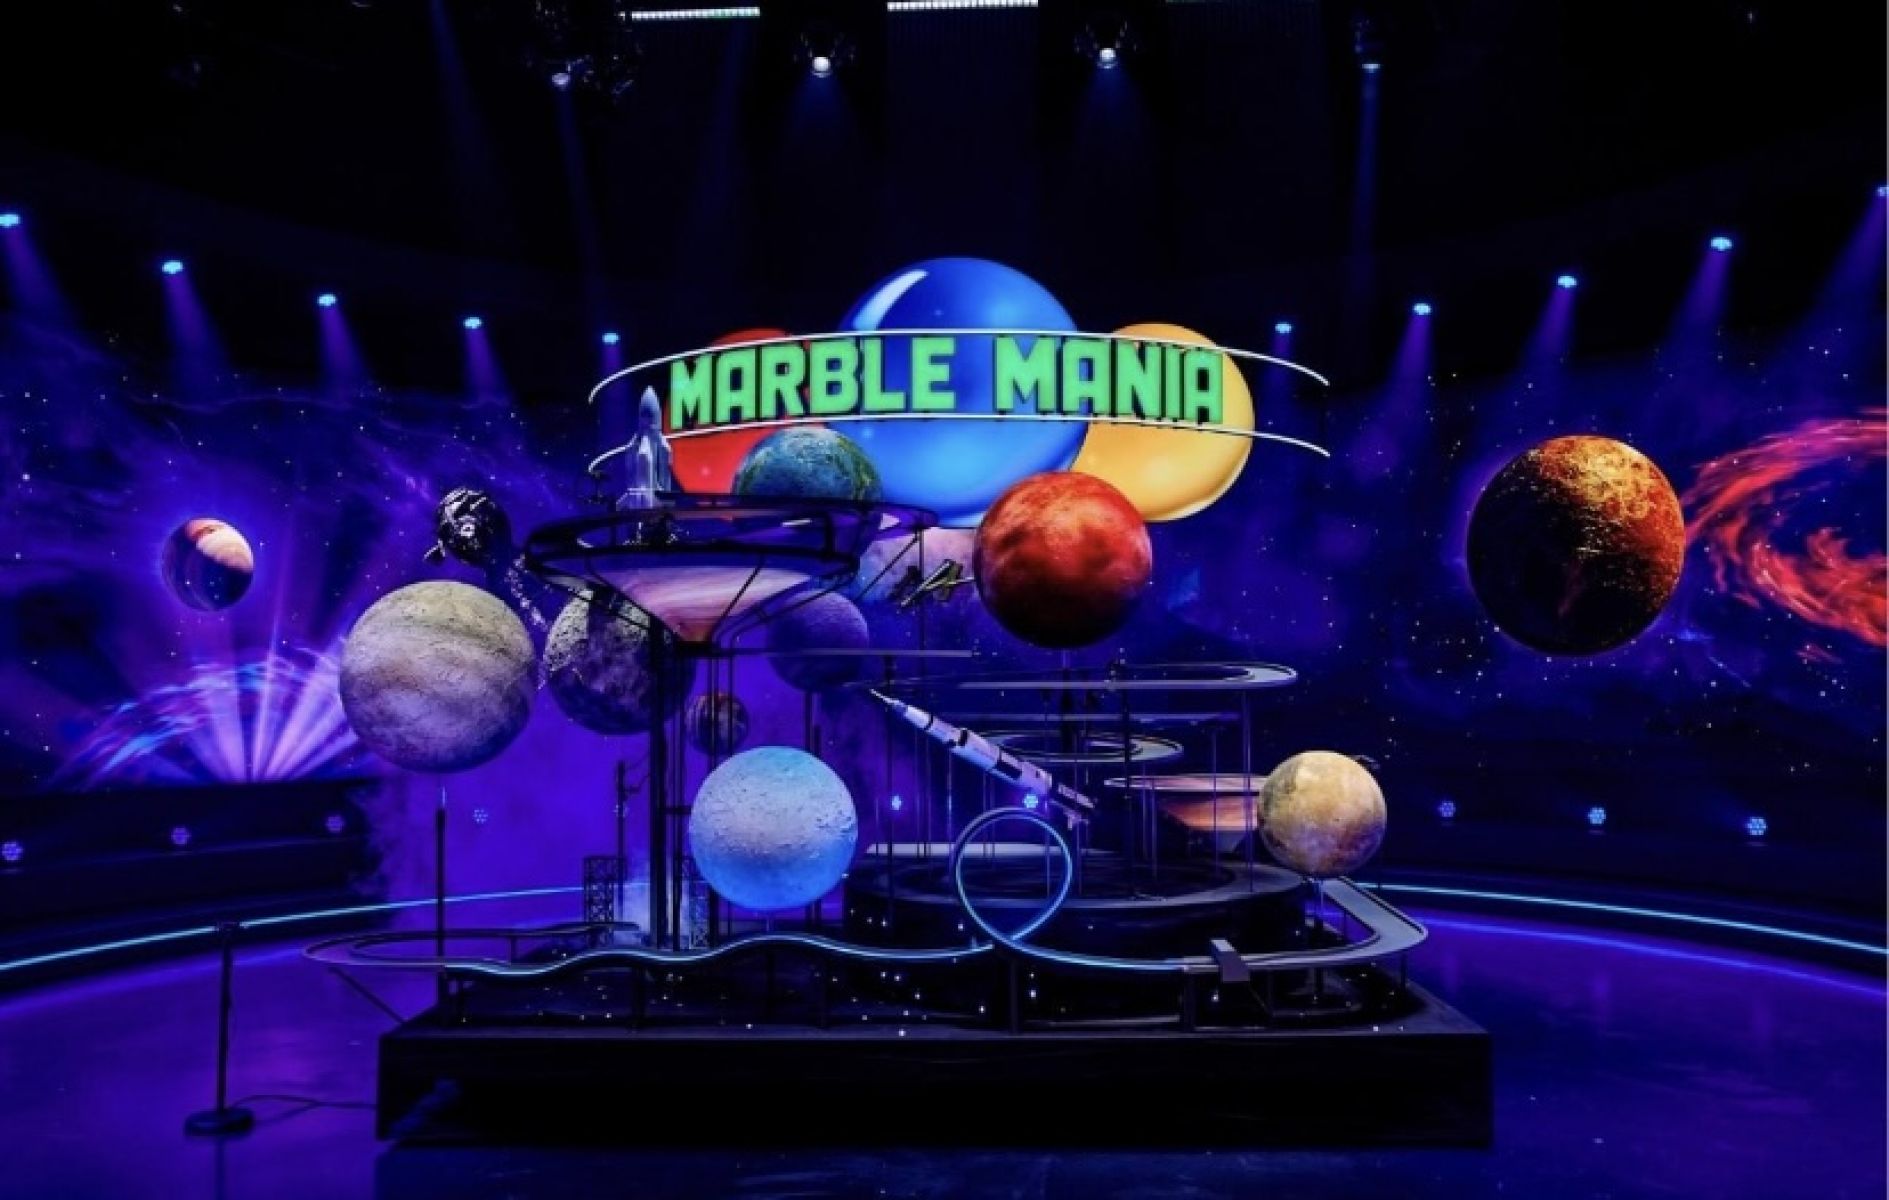 Marble mania